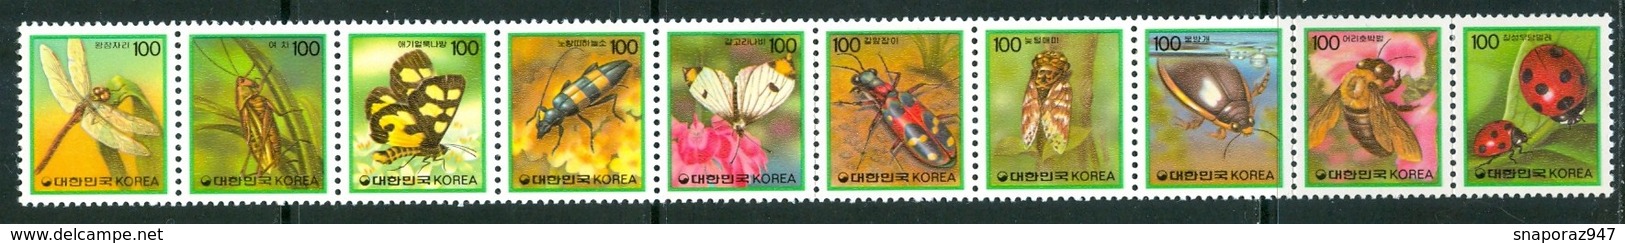 1991 South Korea Coleotteri Beetles Insetti Insects Insectes Set MNH** Ye140 - Corea Del Sur